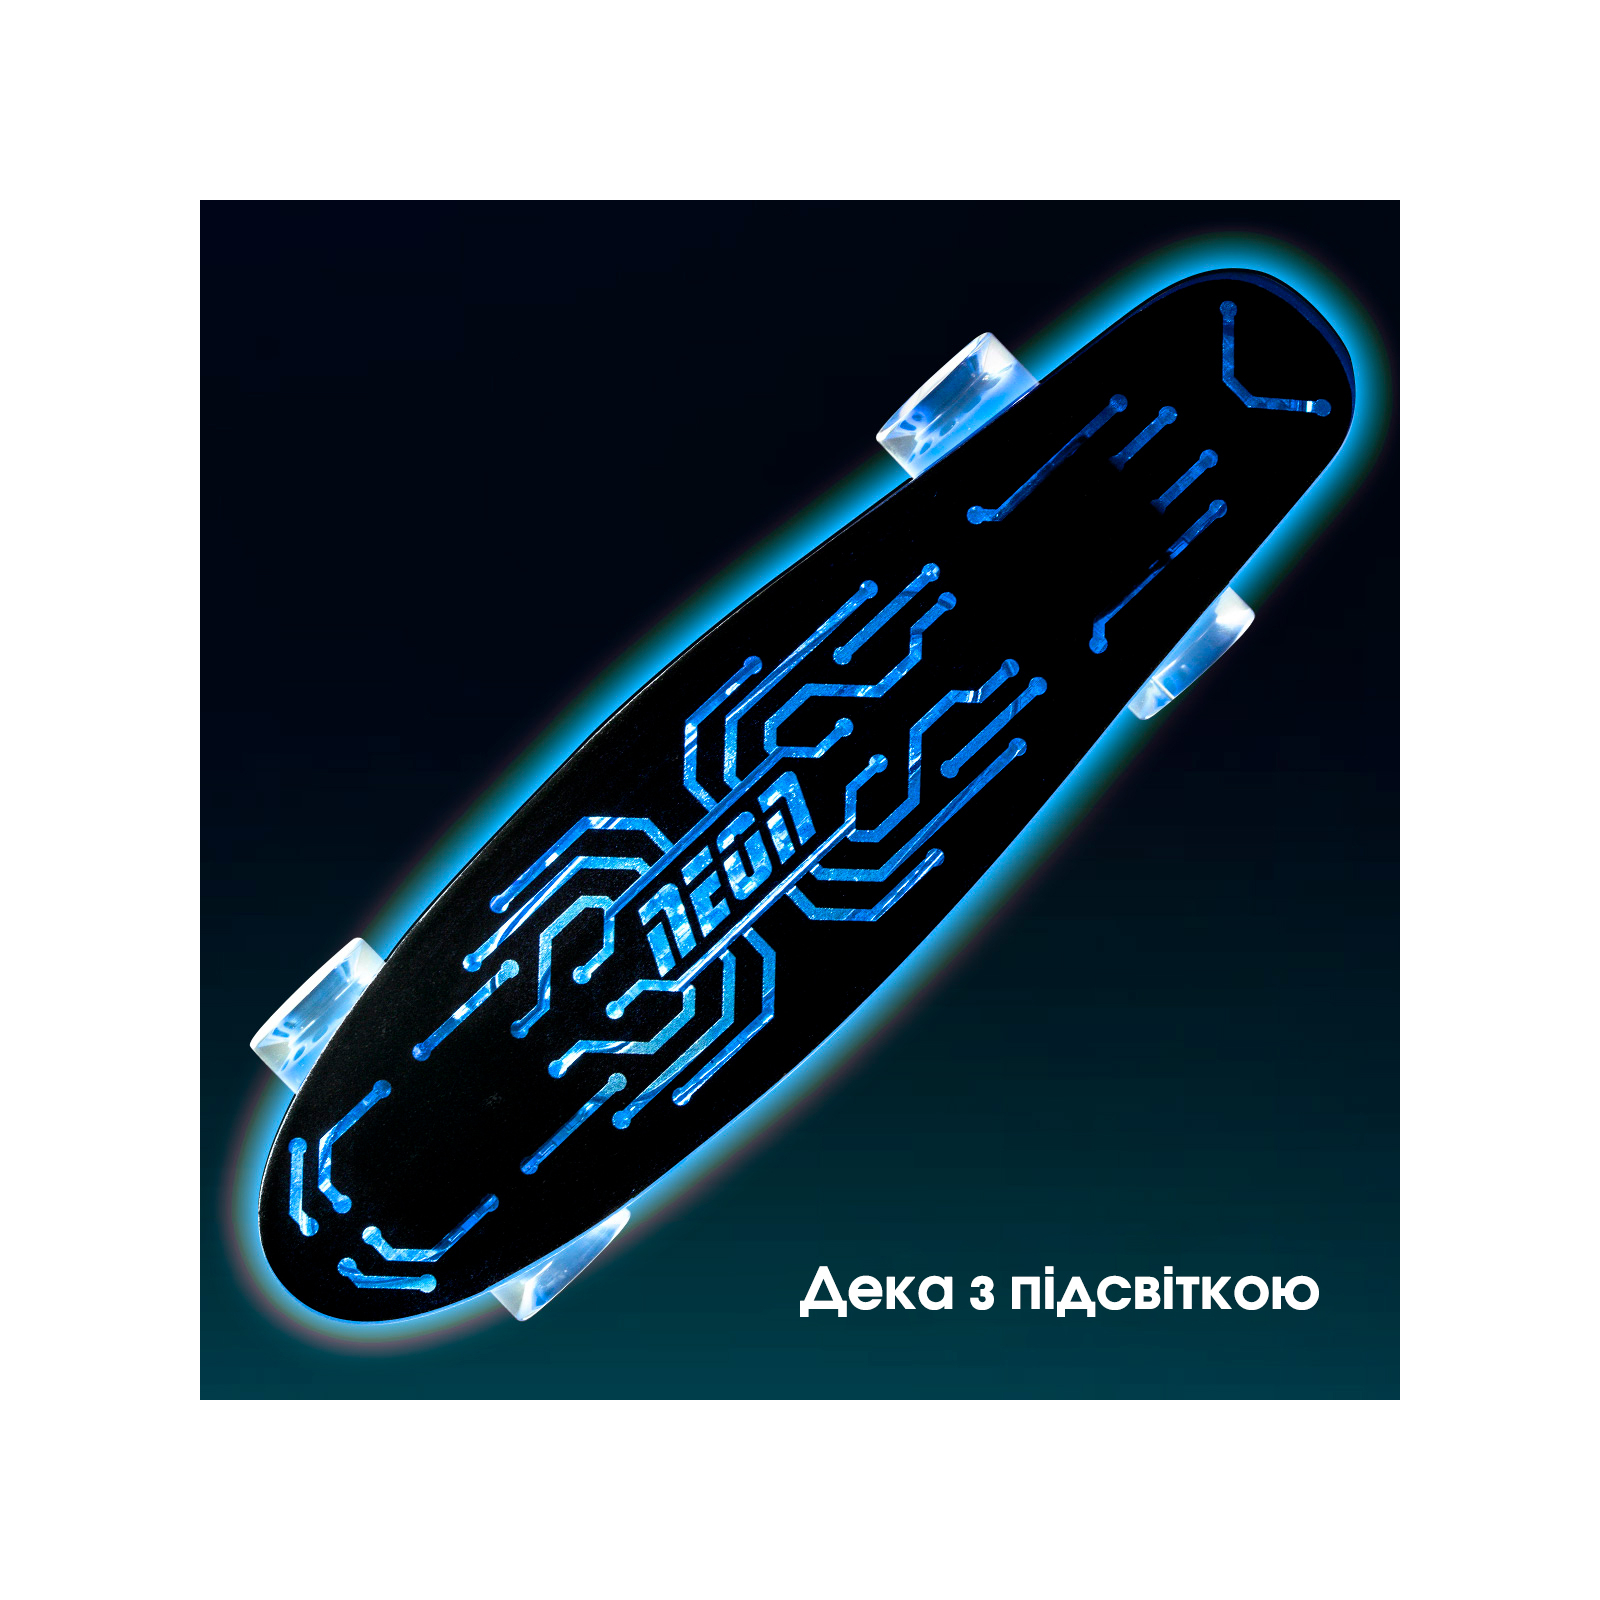 Скейтборд детский Neon Hype Синий (N100787) изображение 6